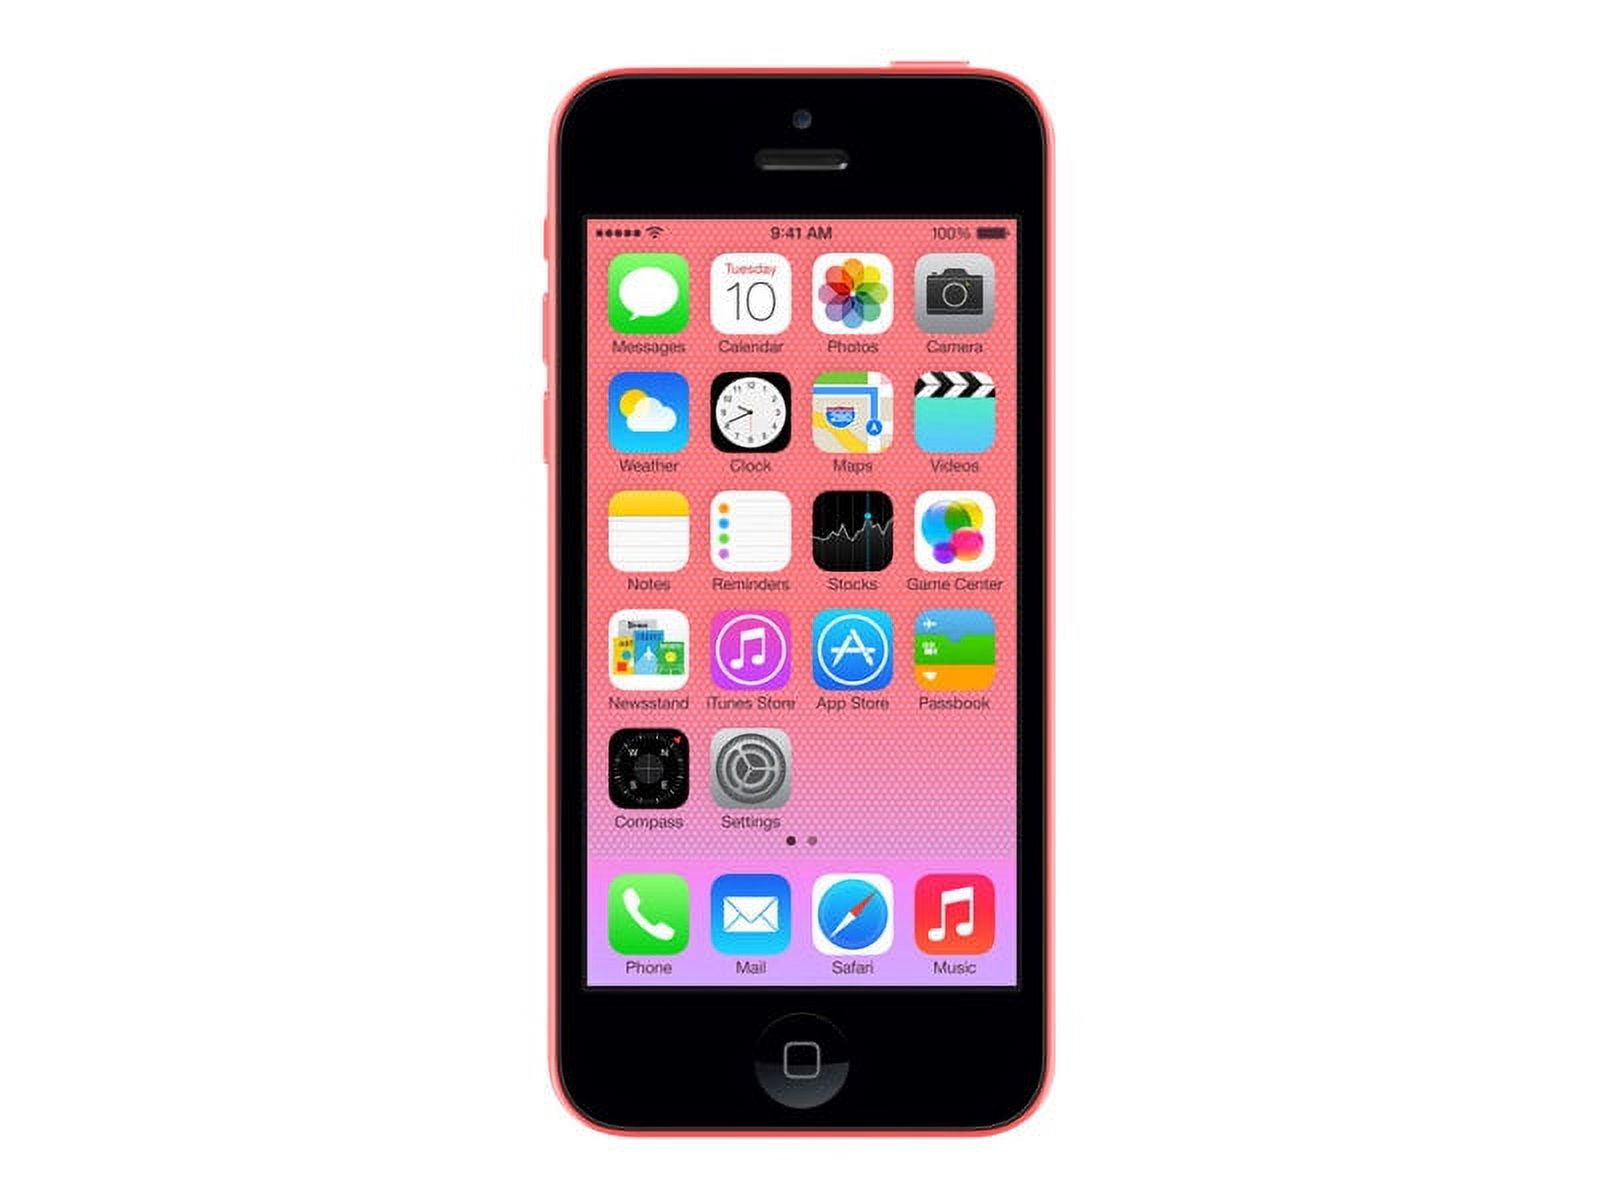 Restored Apple iPhone 5c 8GB, Pink - Unlocked (Refurbished) - image 1 of 8